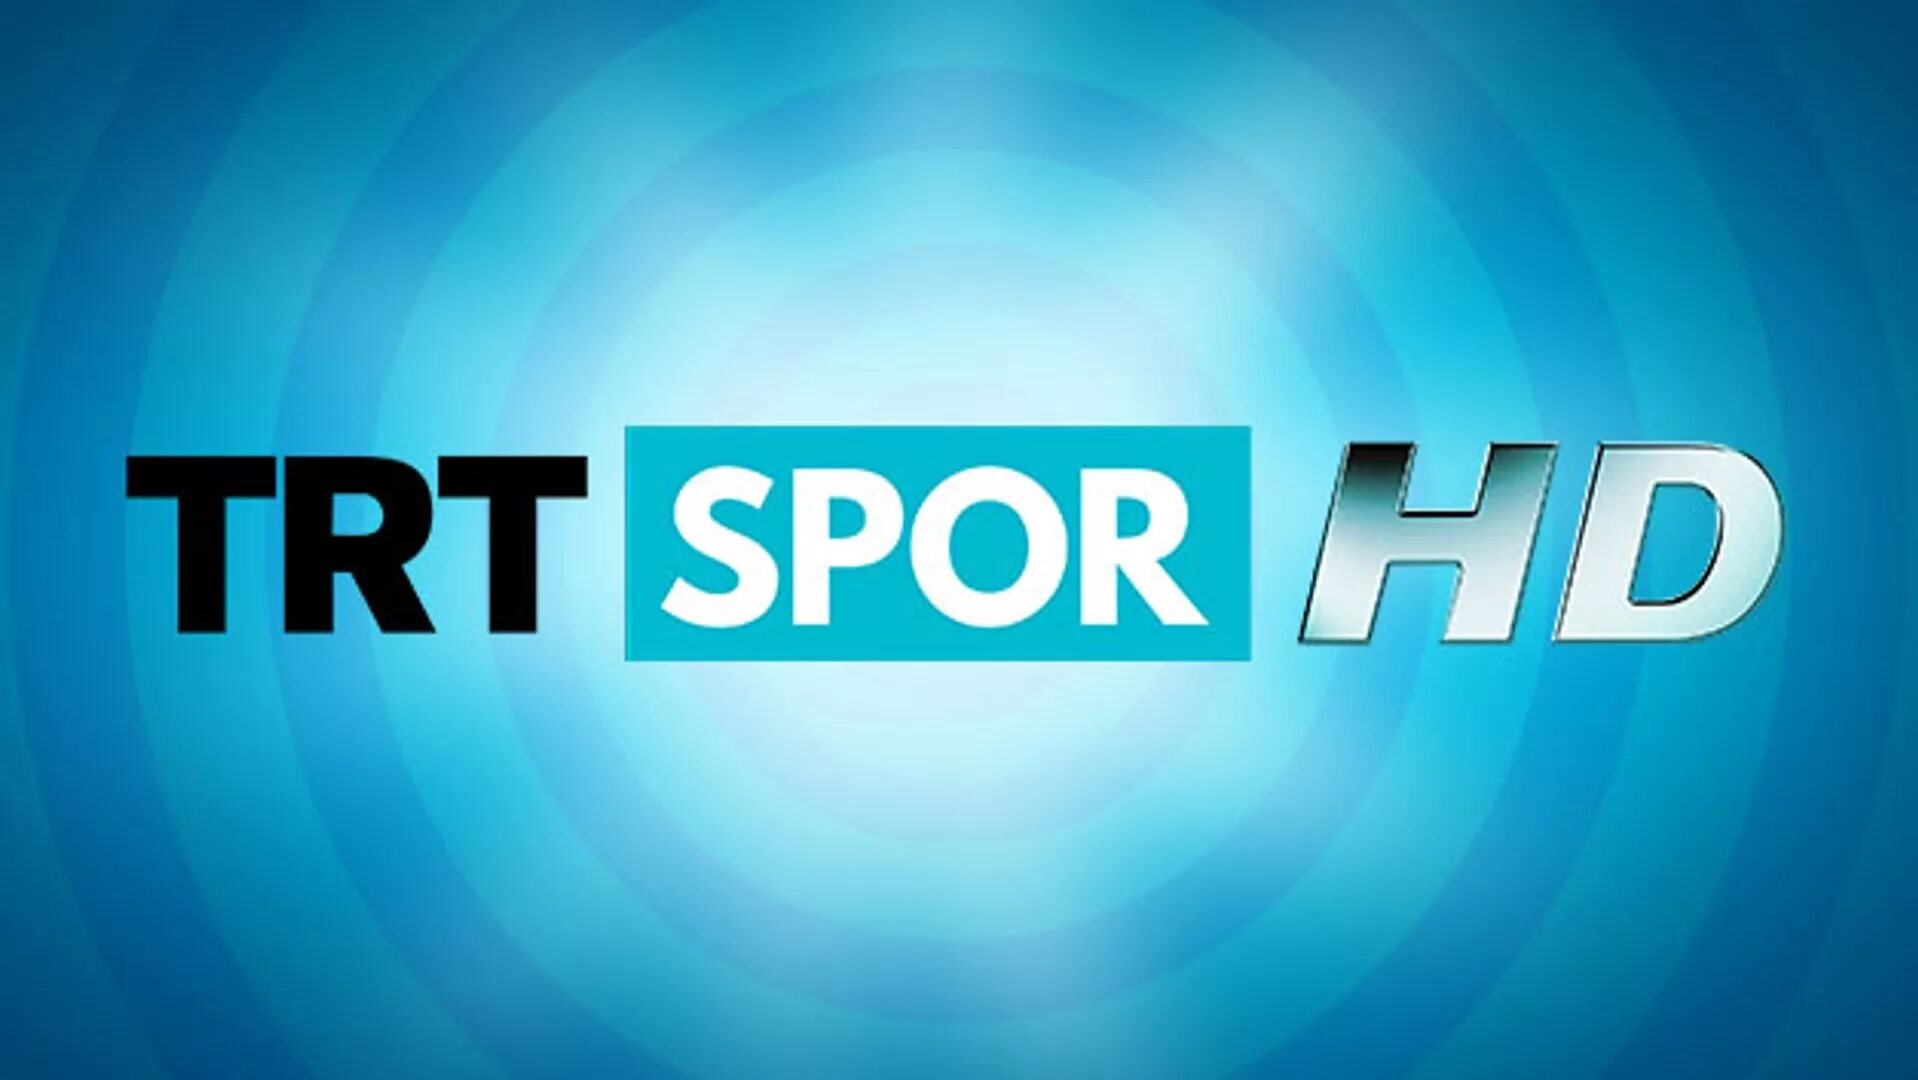 Trt canlı yayın. Trt3 Spor. TRT 3. TRT лого. TRT Spor HD logo.